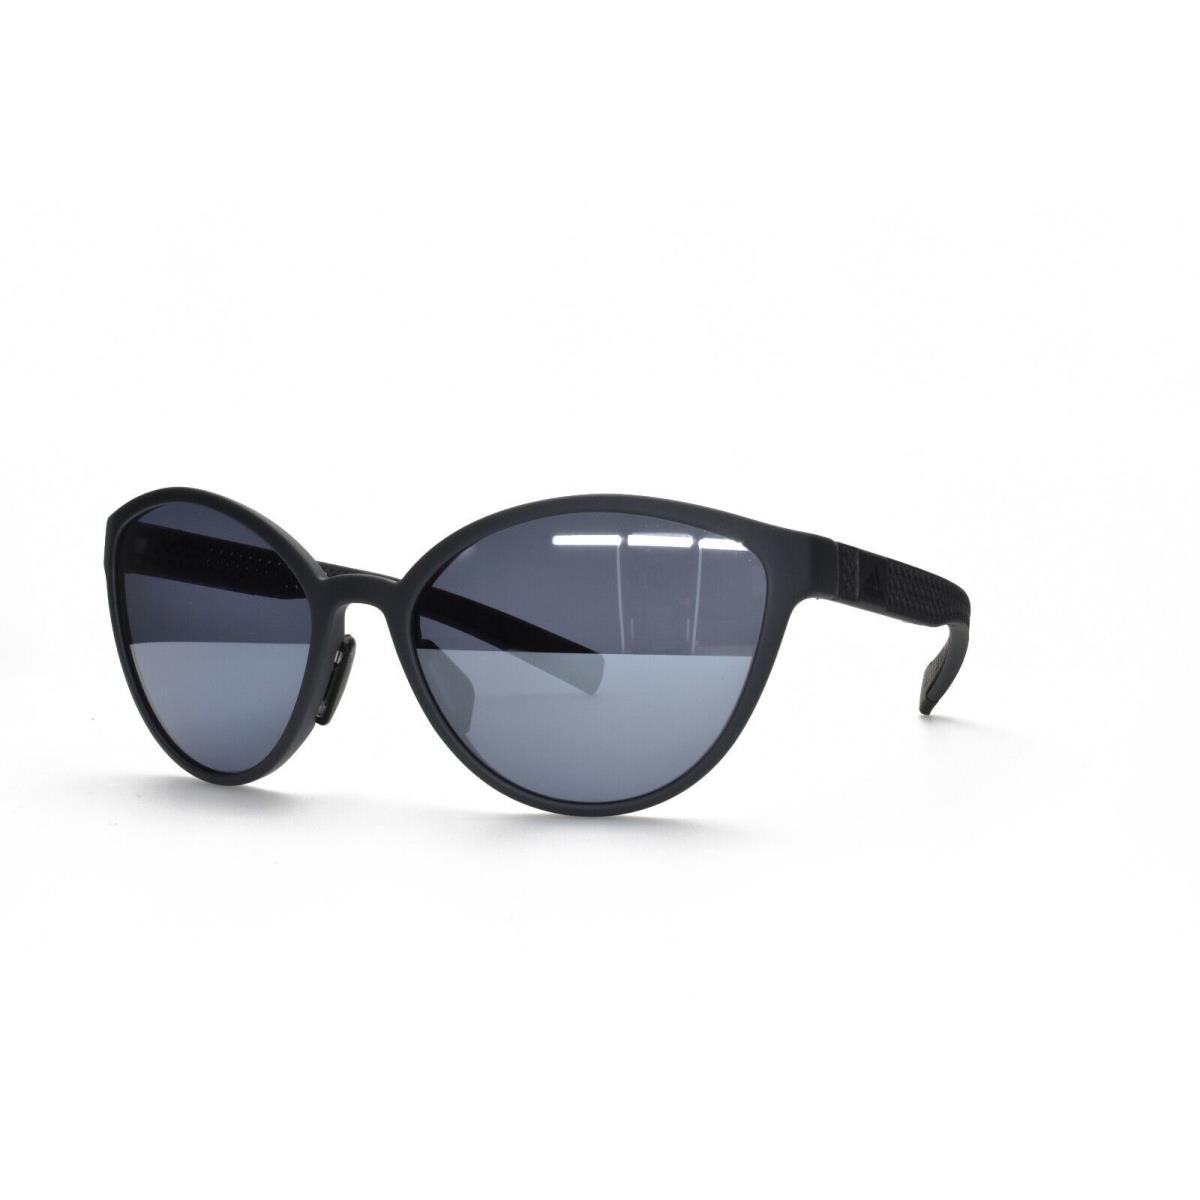 Adidas Sunglasses by Silhouette 3D Print Frame Tempest 37 75 6500 56 X White - Frame: Gray, Lens: Gray